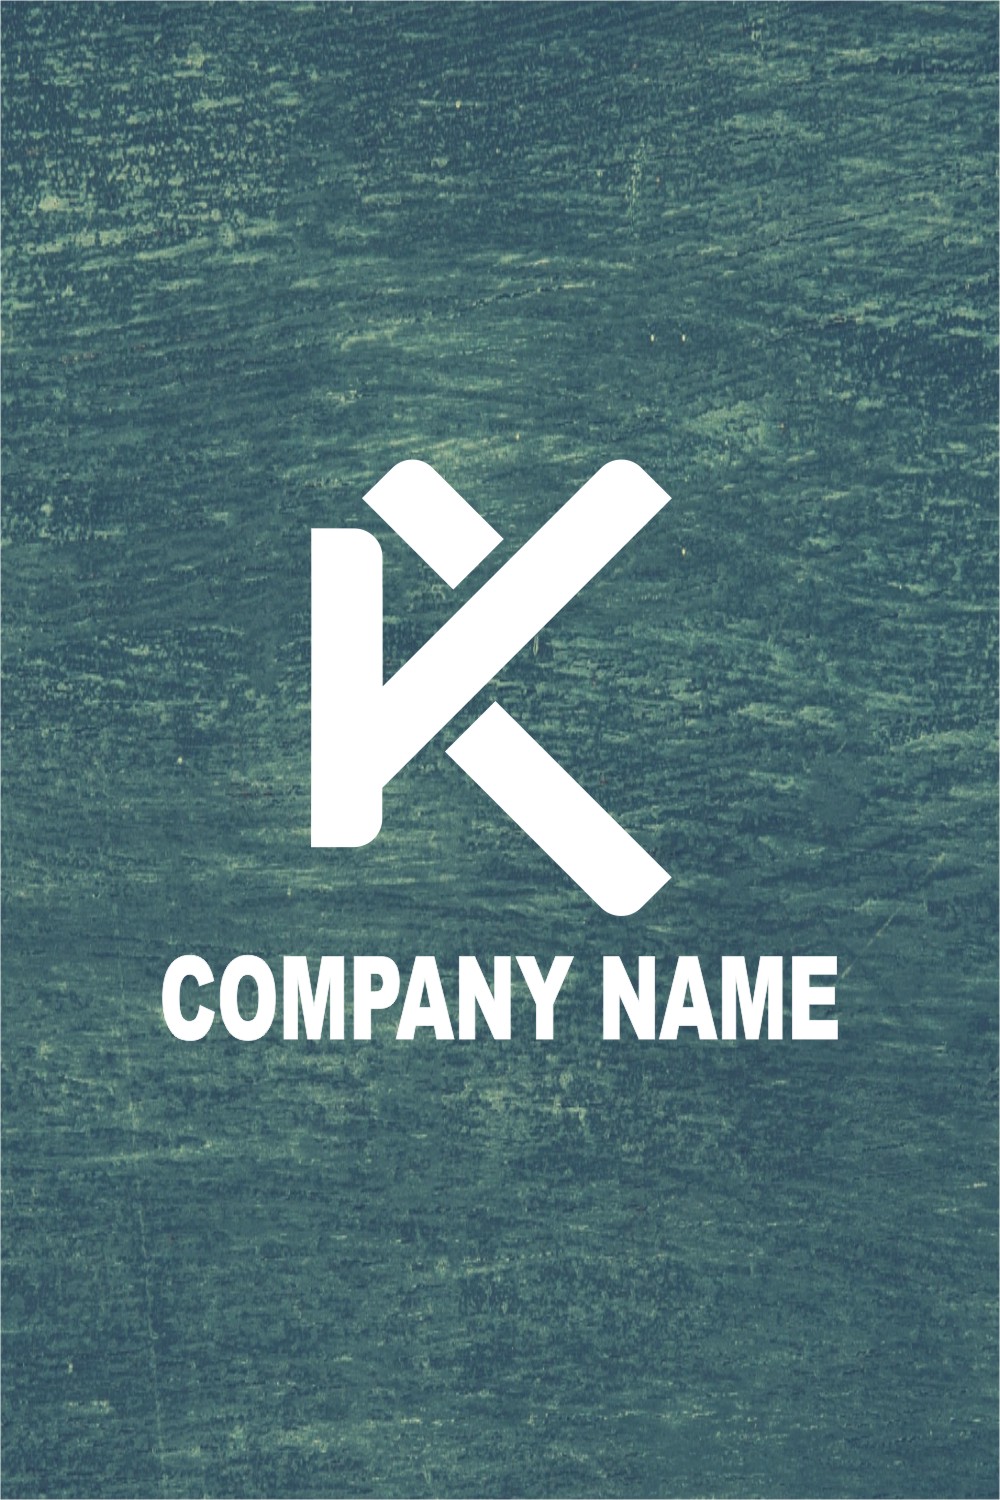 Professional K logo pinterest preview image.